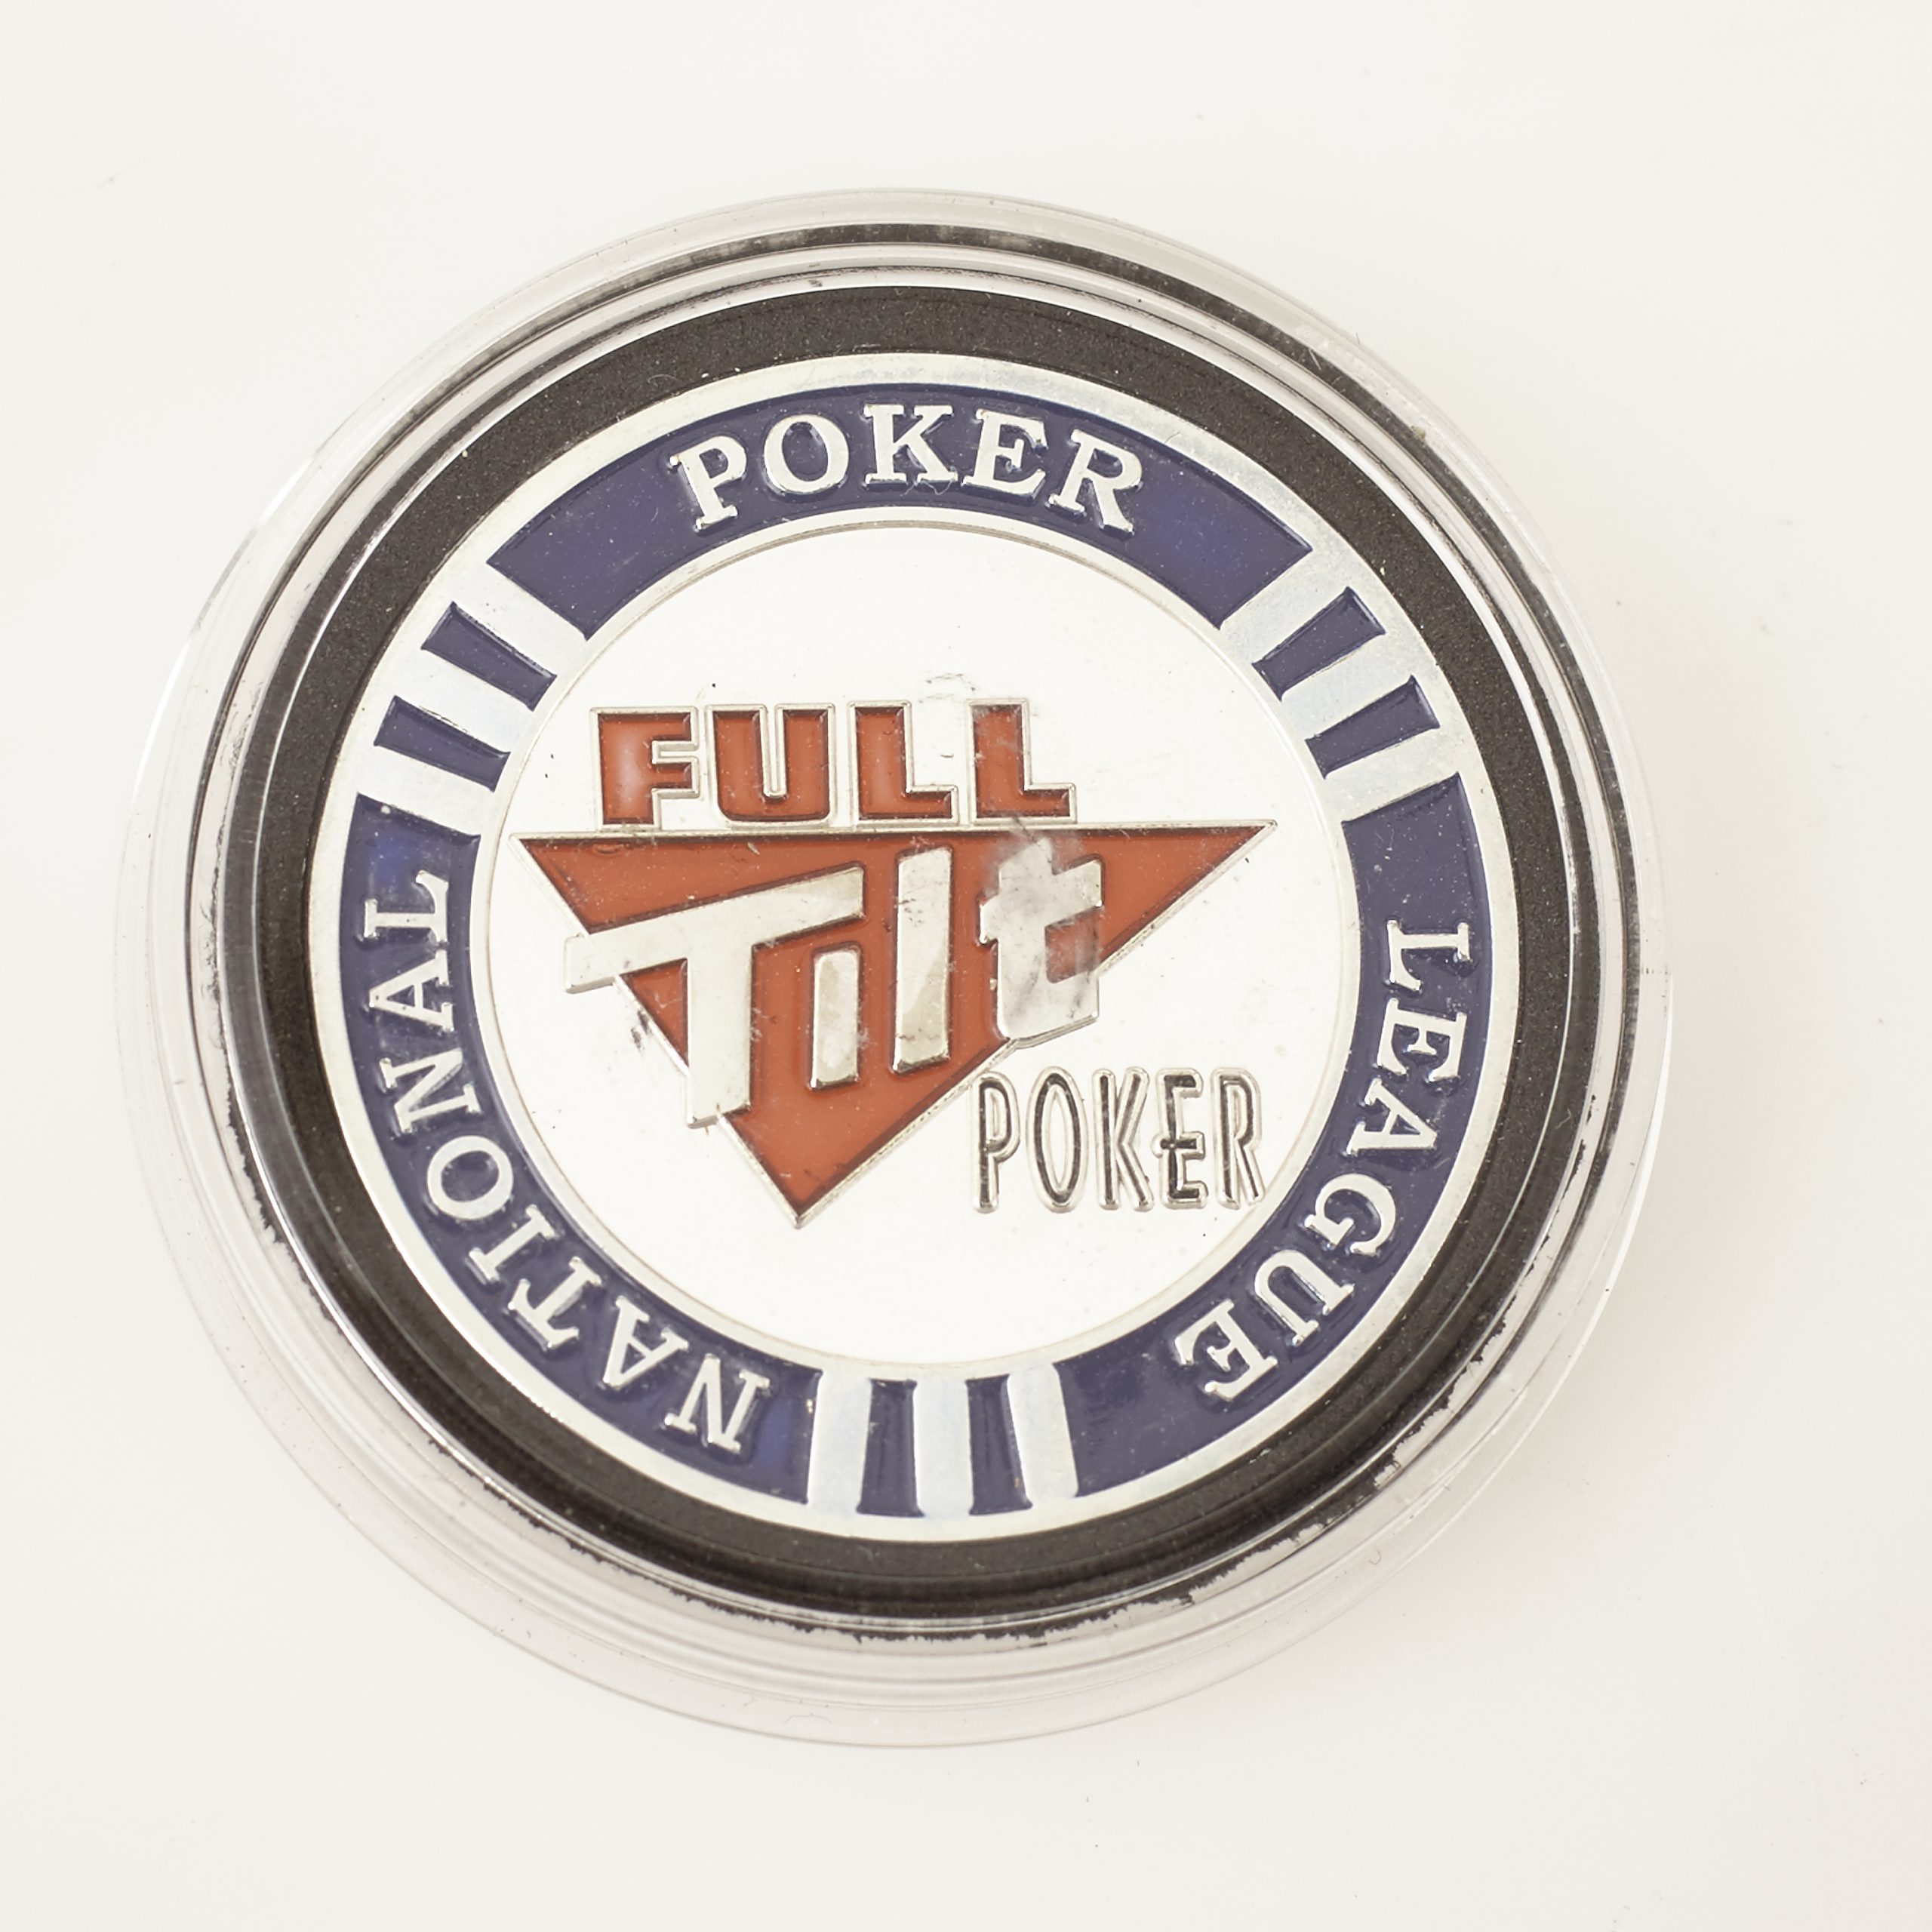 NPL NATIONAL POKER LEAGUE, FULL TILT POKER, BUDDHA (Silver), Poker Card Guard